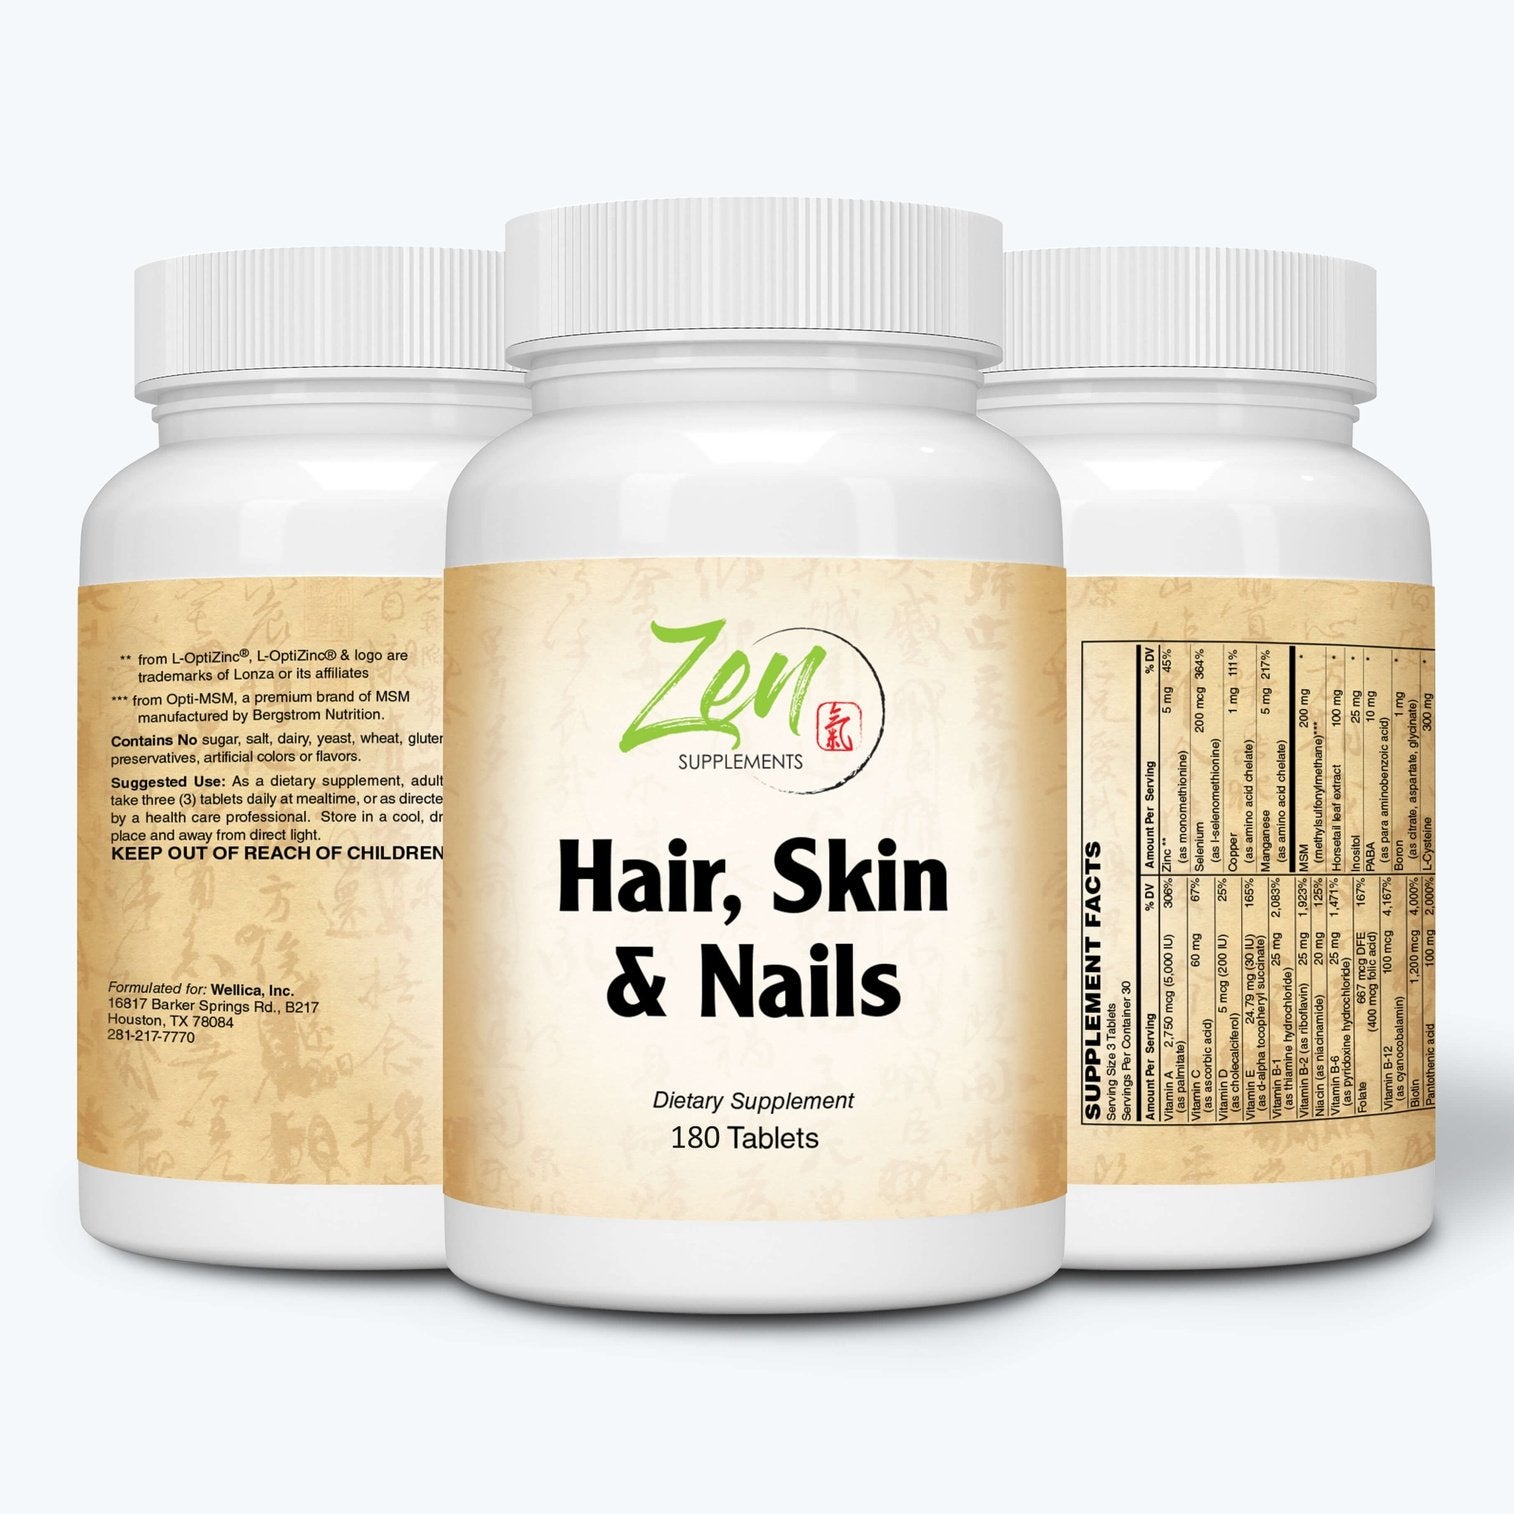 Zen Supplements - Hair, Skin & Nails Formula - With Biotin - 180 Tabs